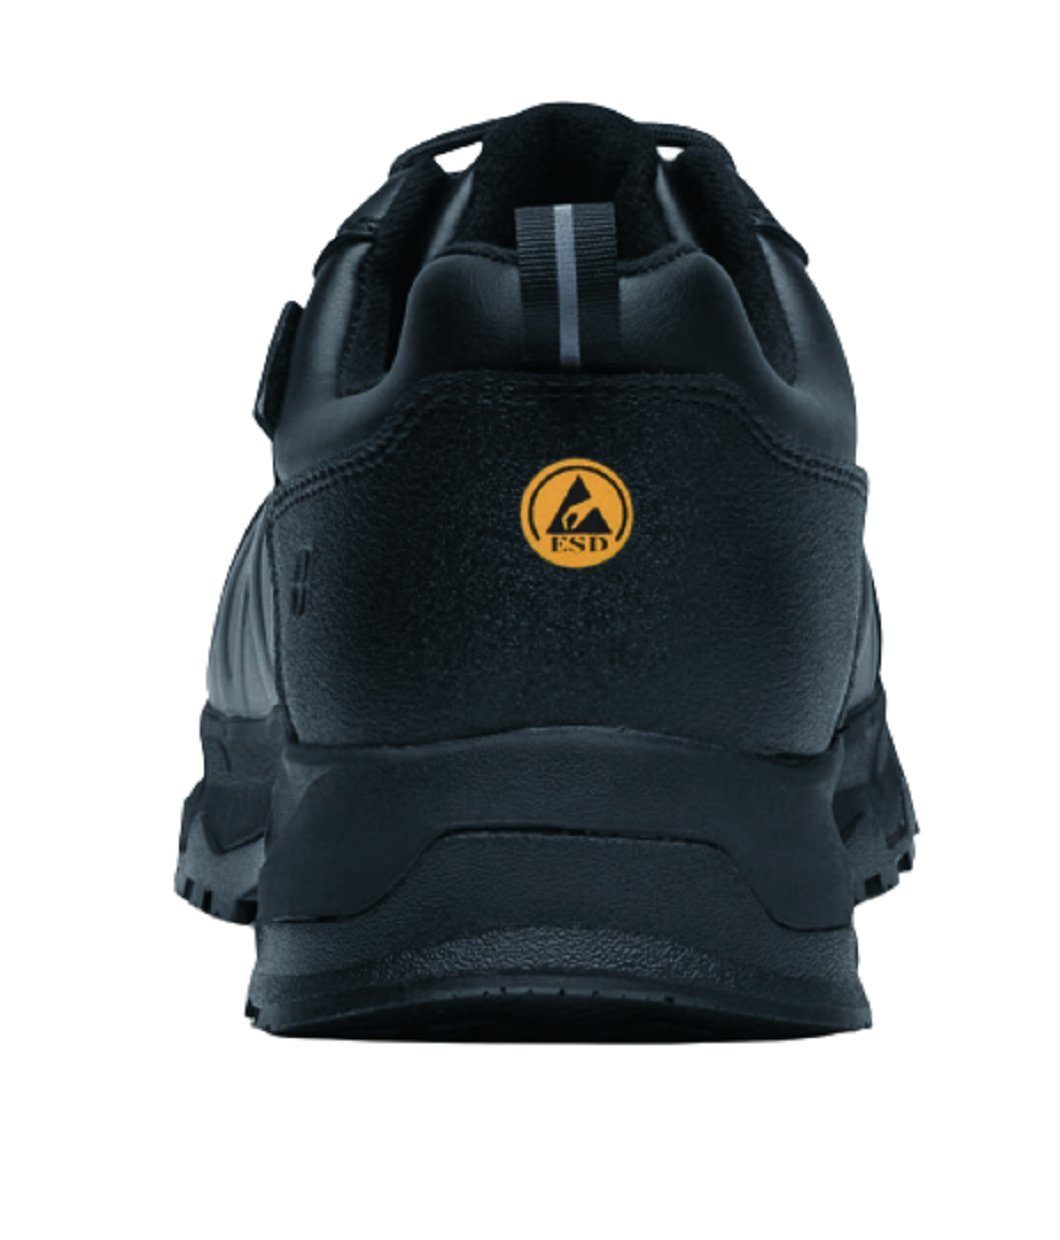 Callan Crews Sicherheitsschuh HI wasserdicht SRC Low ESD, schwarz, CI O2 For Hiker-Schuhe Shoes